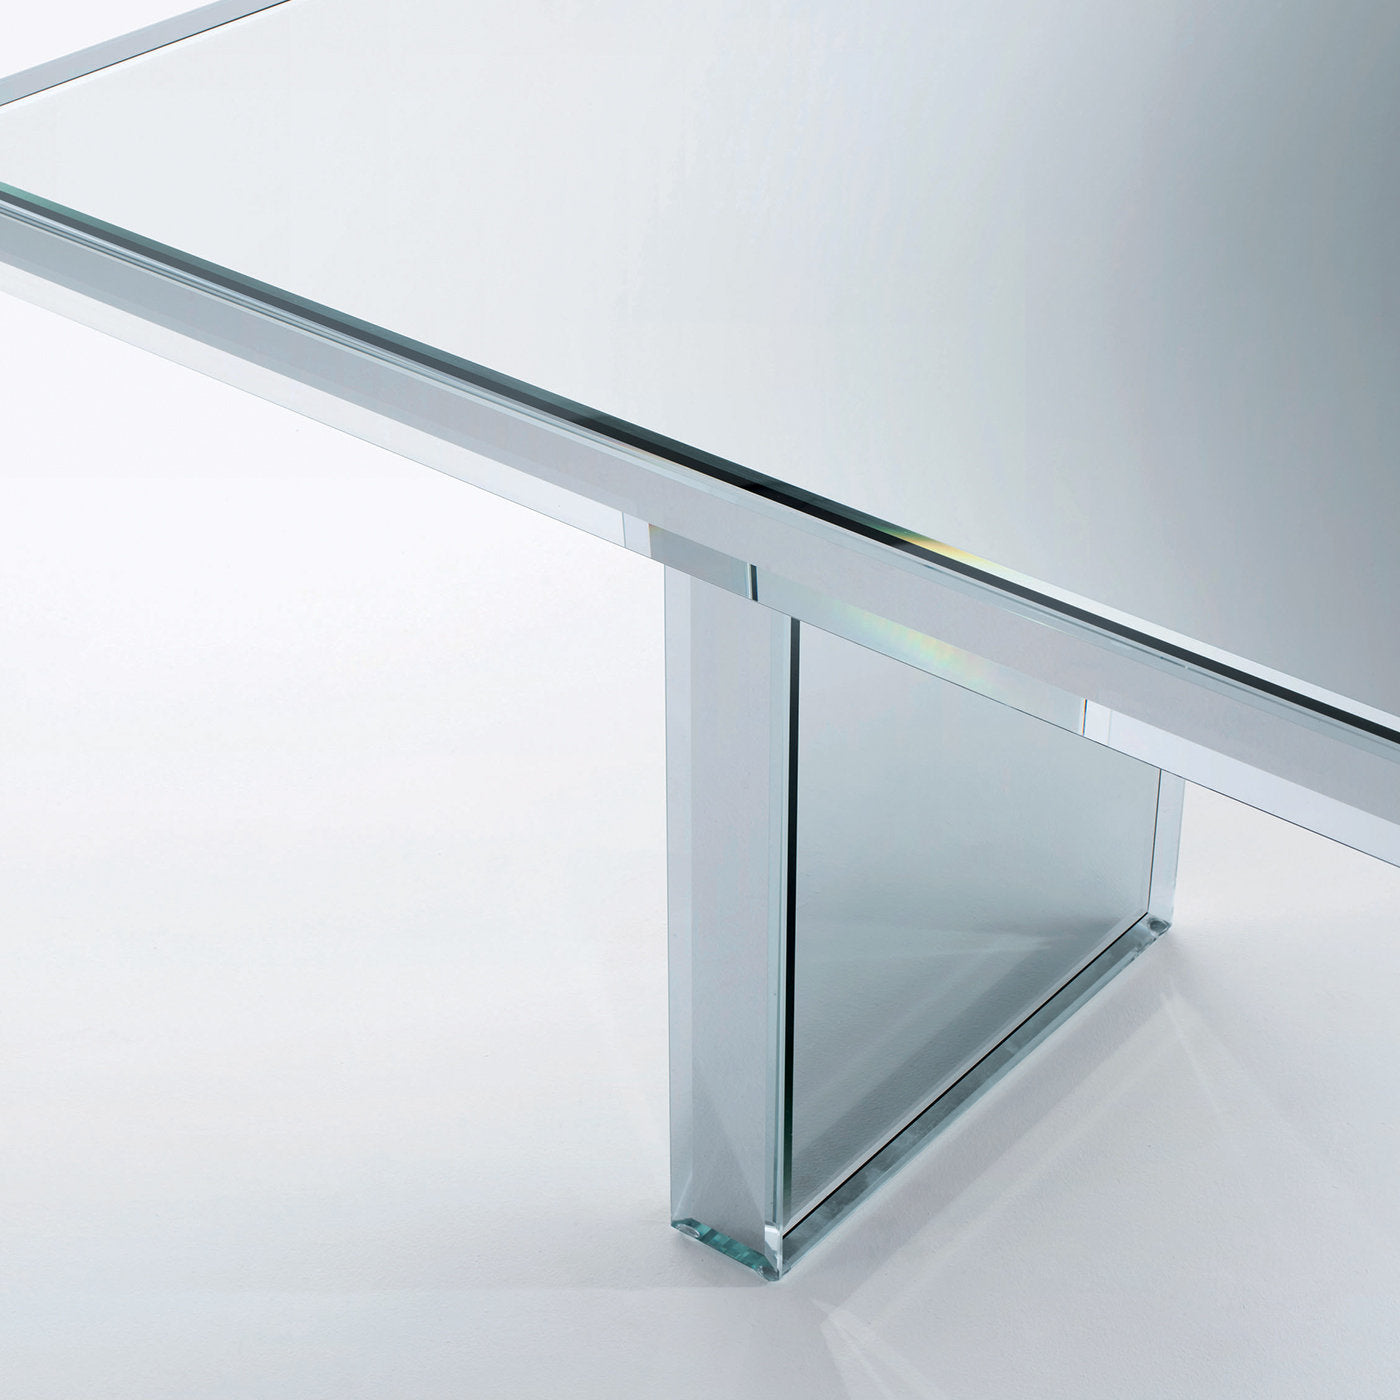 Prism Mirror Table by Tokujin Yoshioka - Alternative view 1